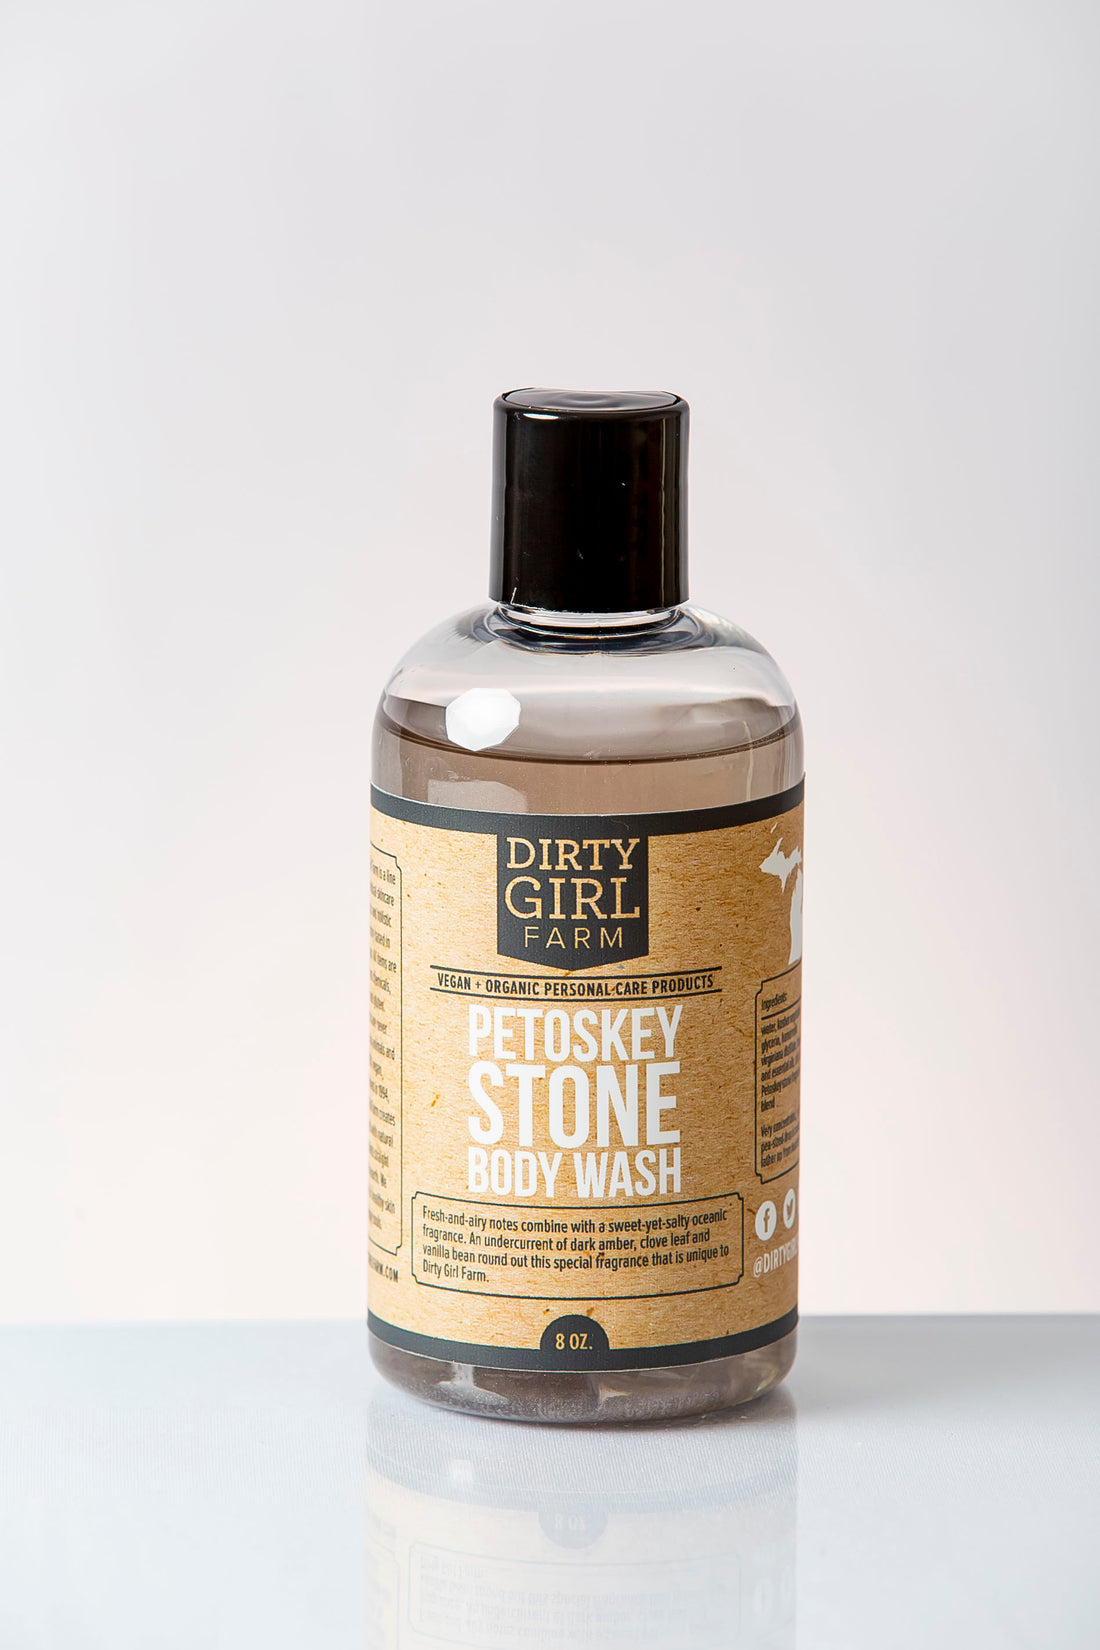 Dirty Girl Farm Petoskey Stone Body Wash